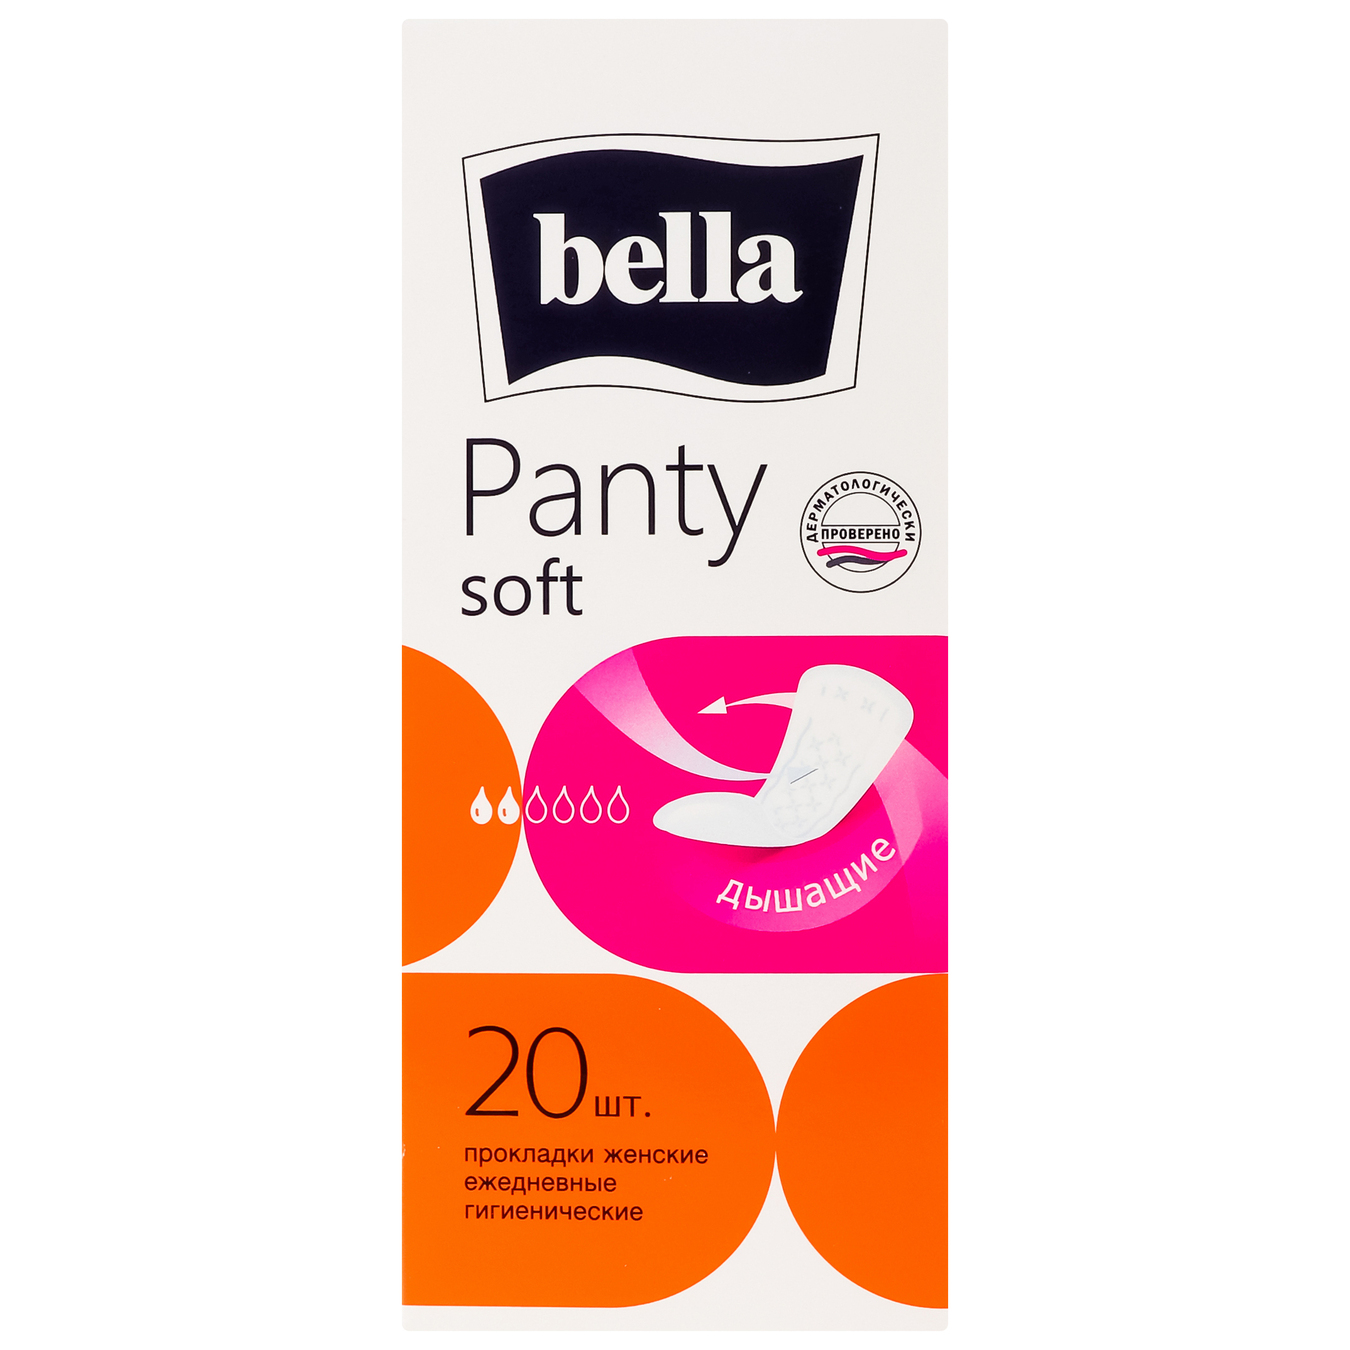 Pads Bella Panty Soft daily 20pcs